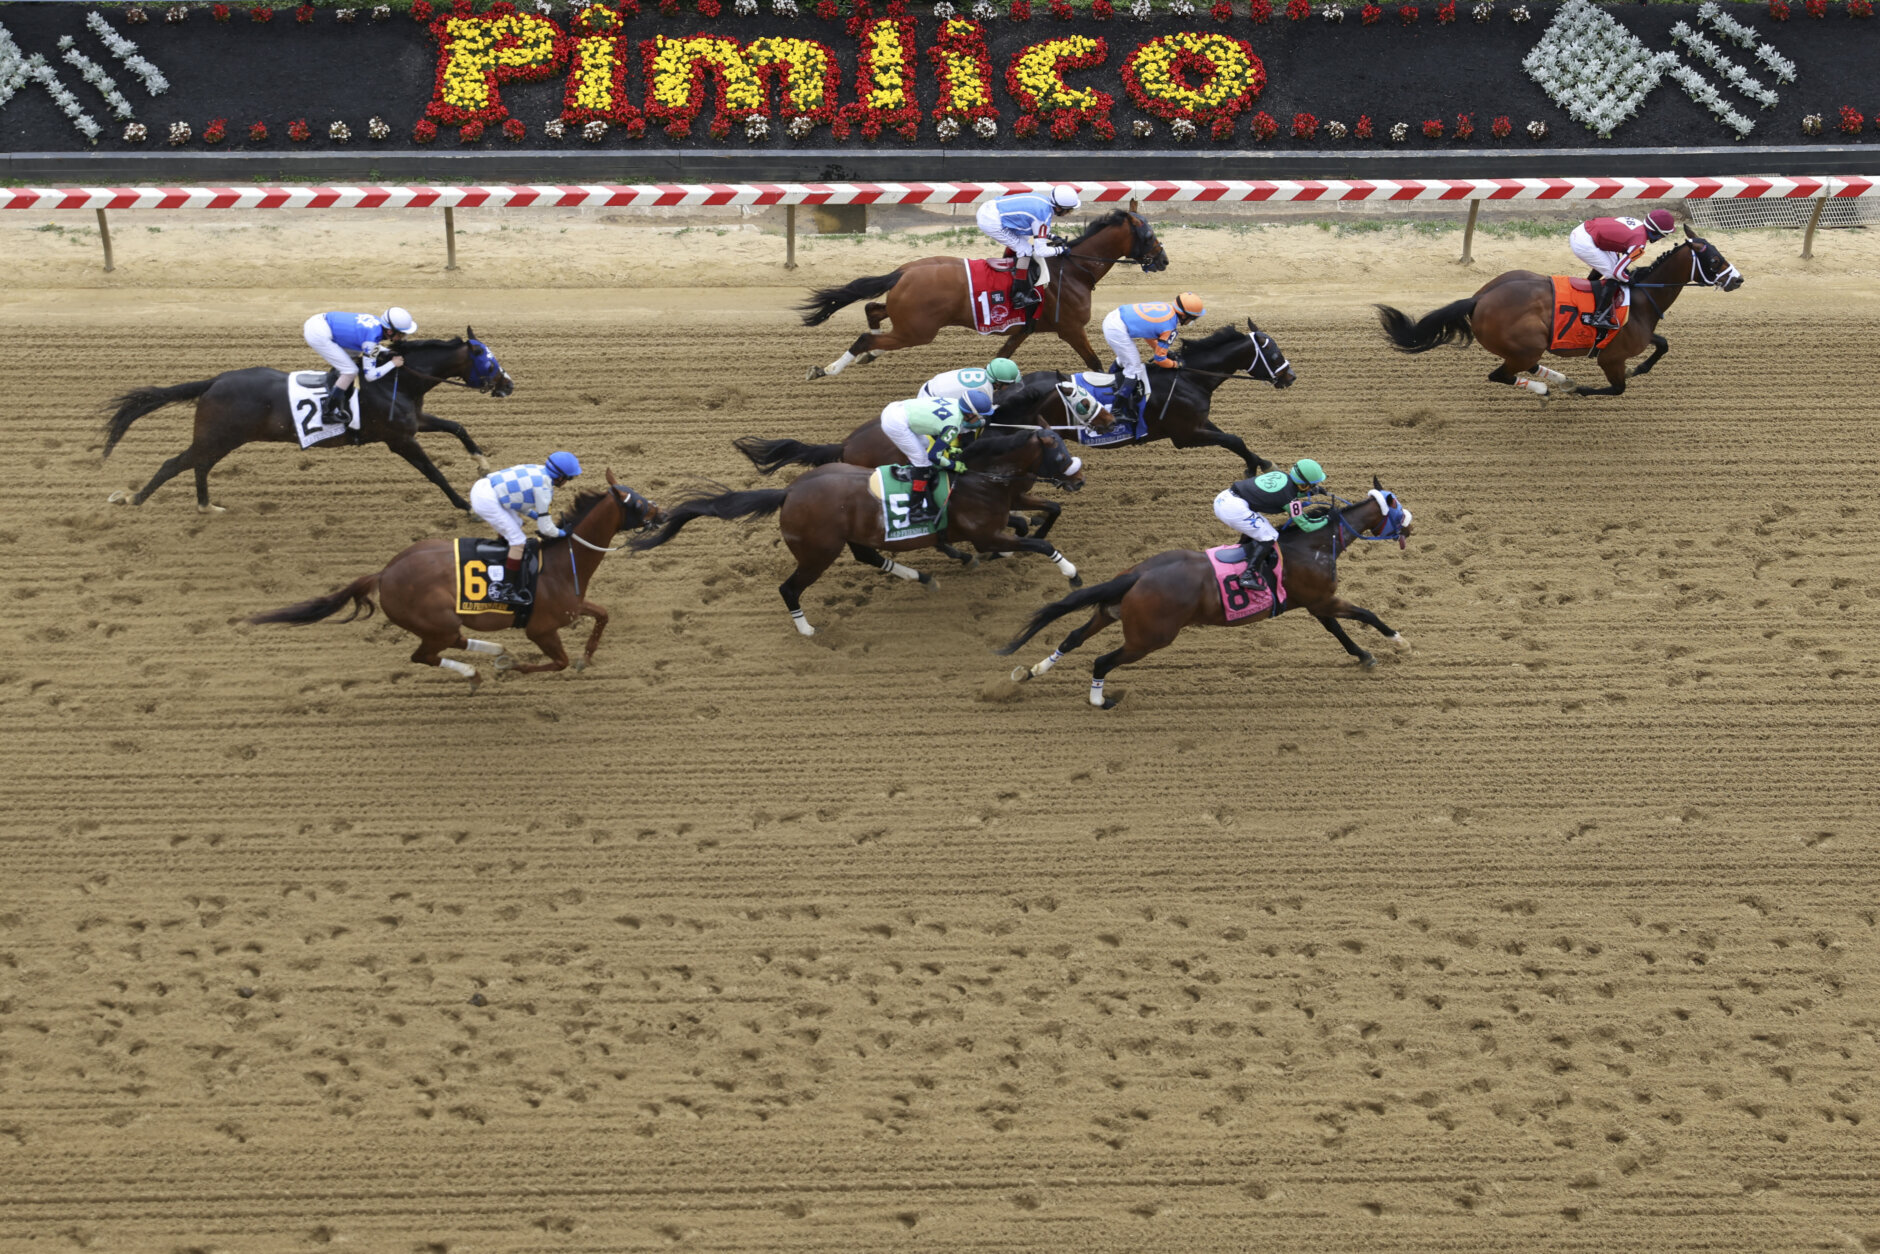 Horses racing at Pimlico